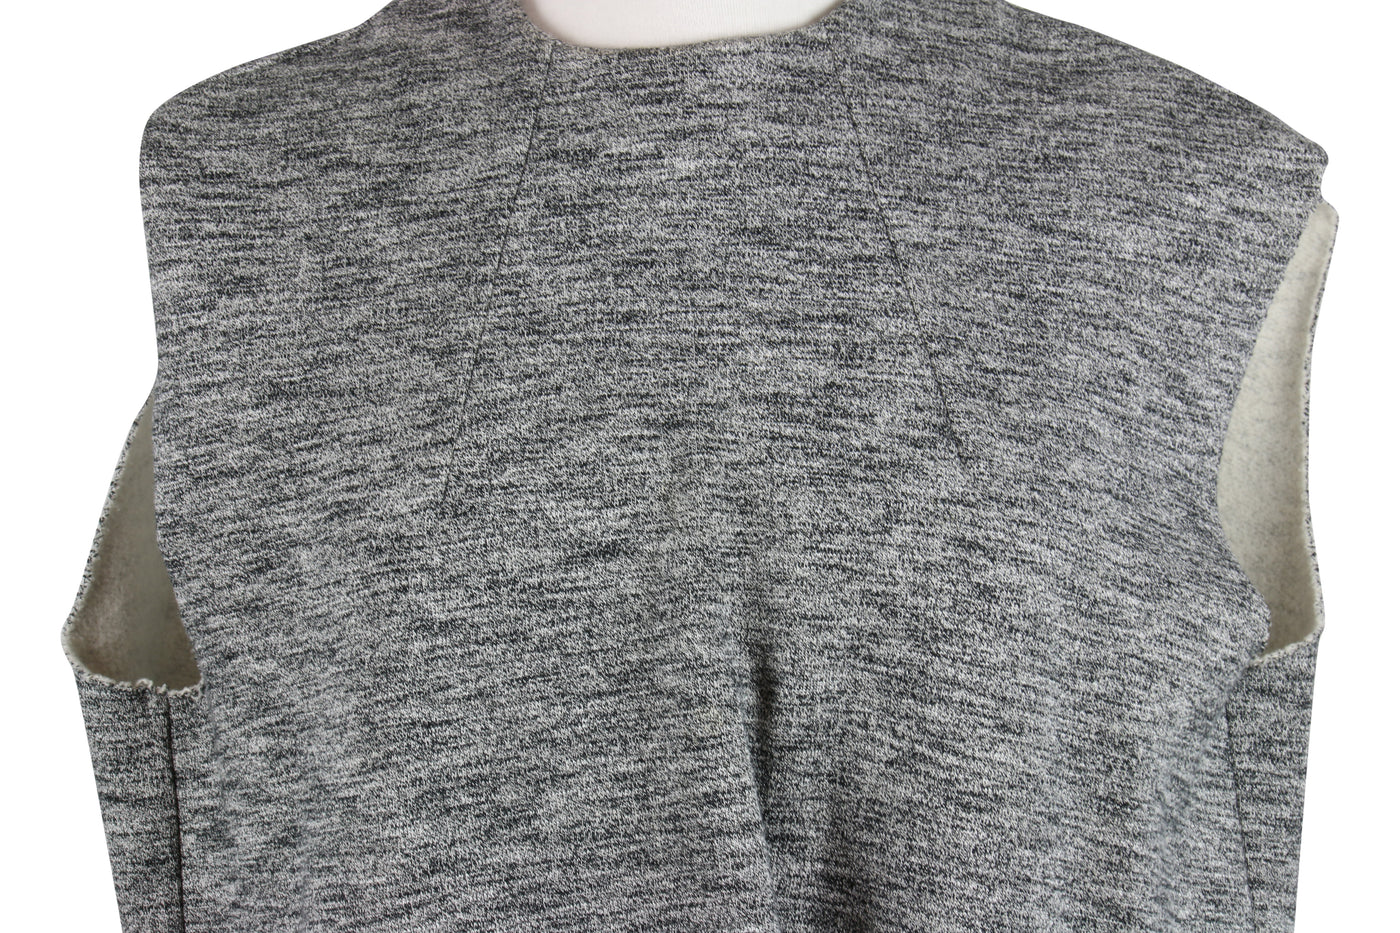 Sleeveless grey cotton top